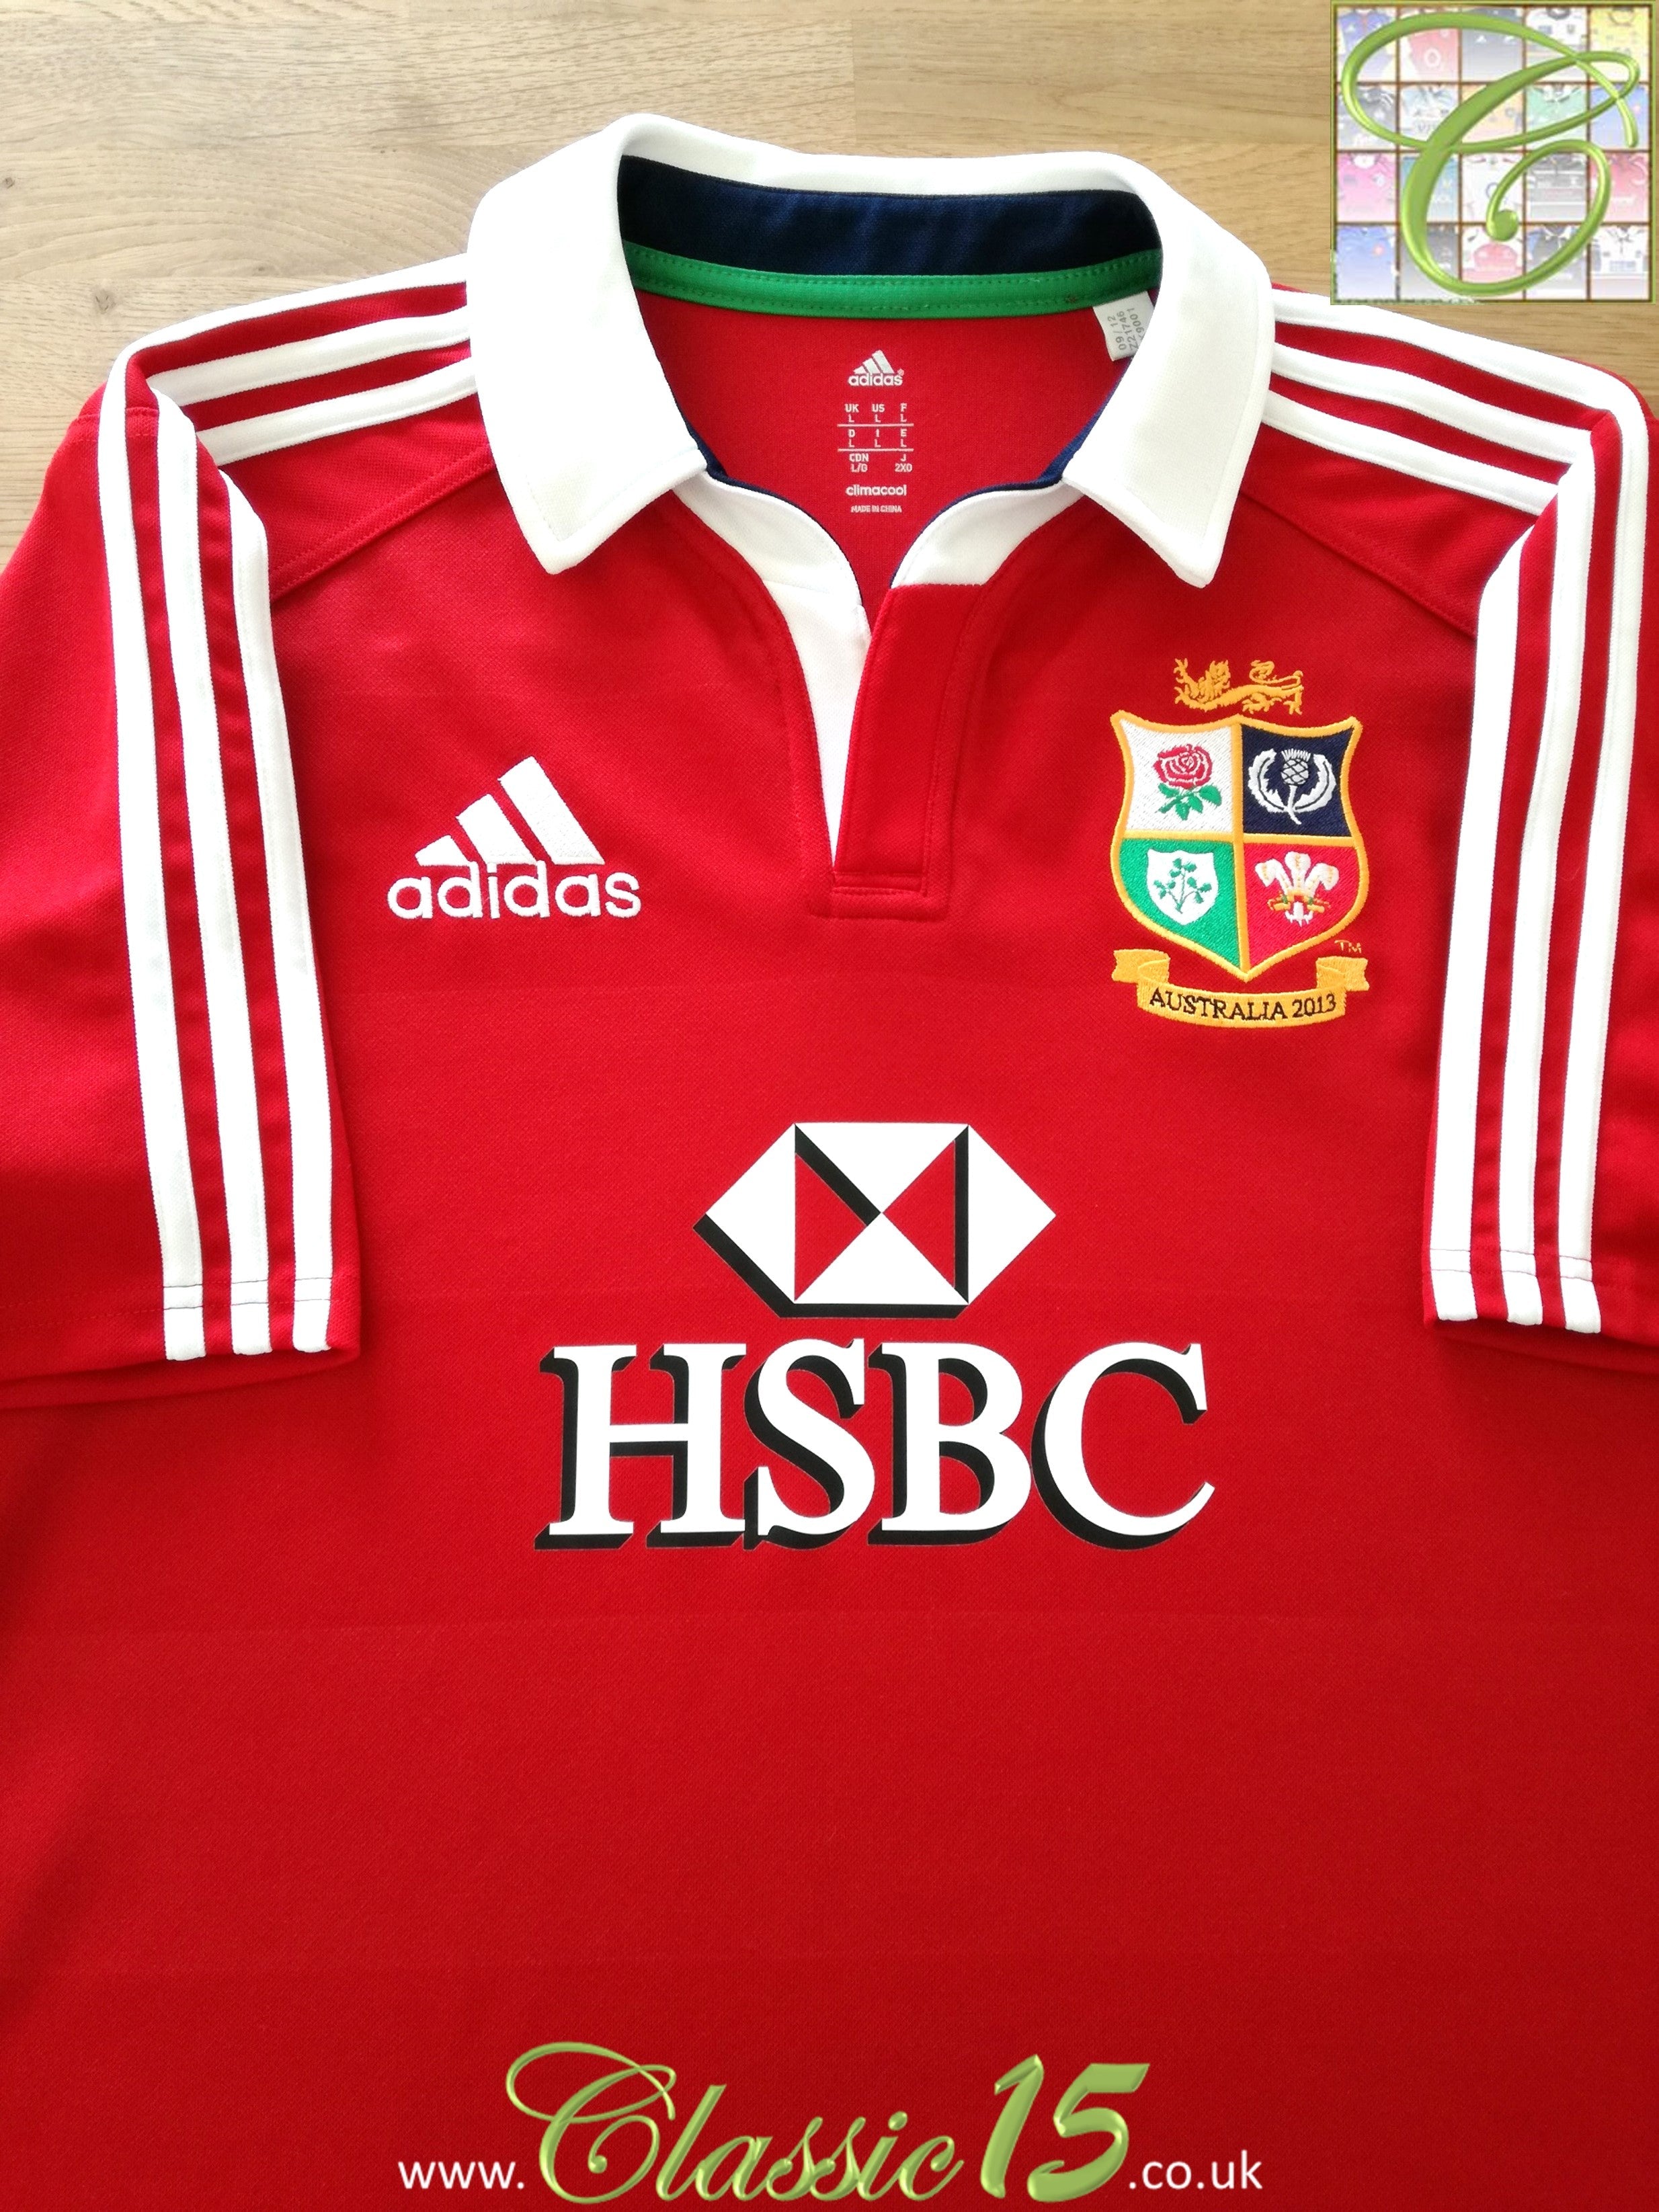 Classic Rugby Shirts  2013 British Irish Lions Vintage Old Jerseys